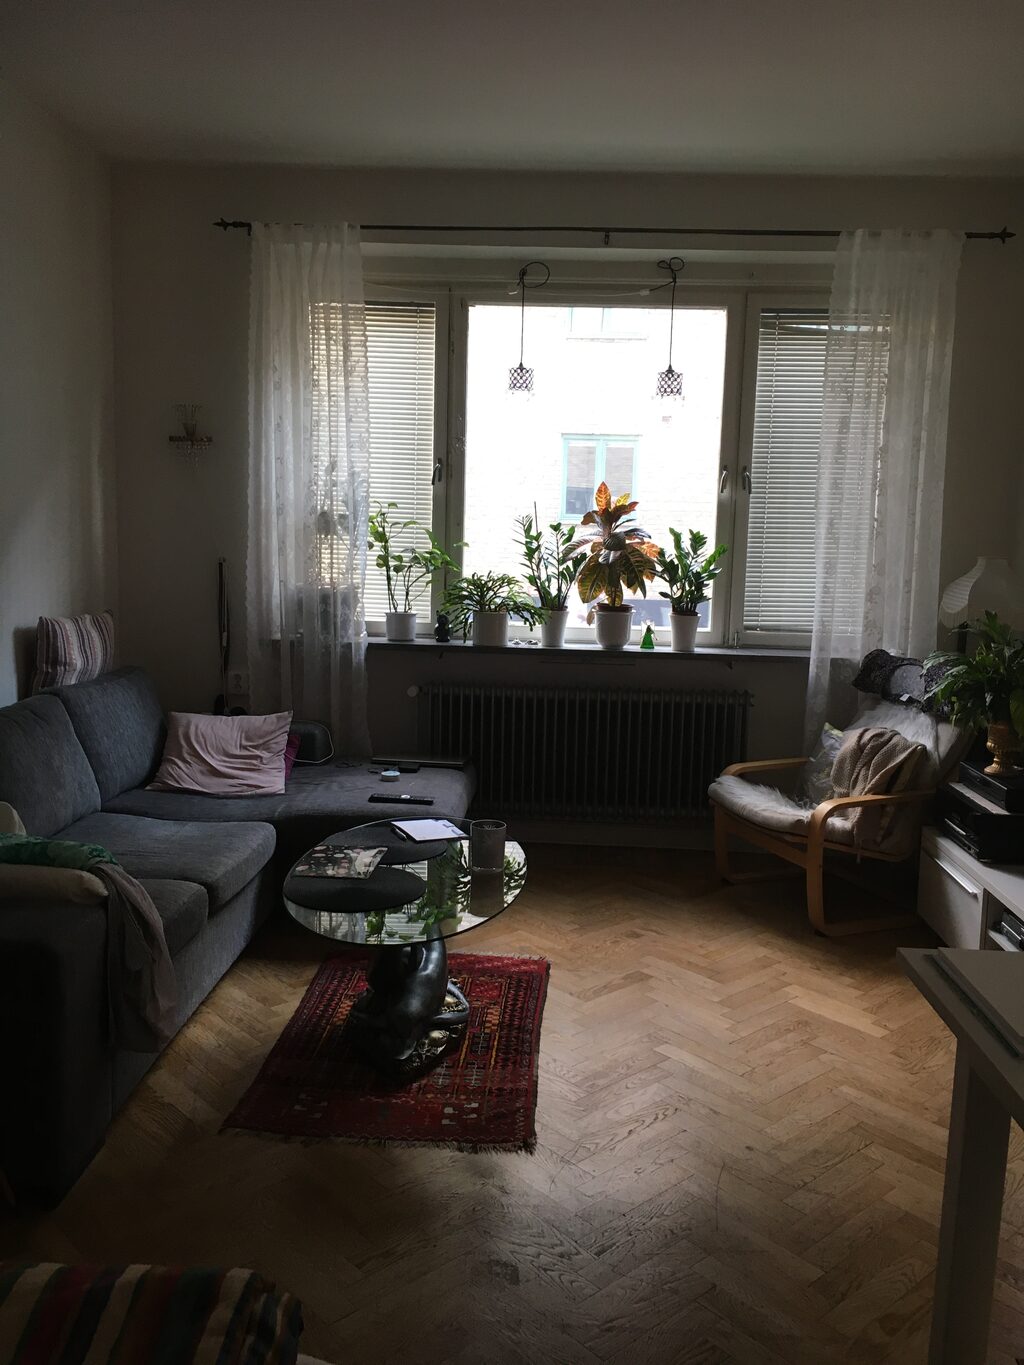 Lägenhetsbyte - Nils Forsbergsgatan 5